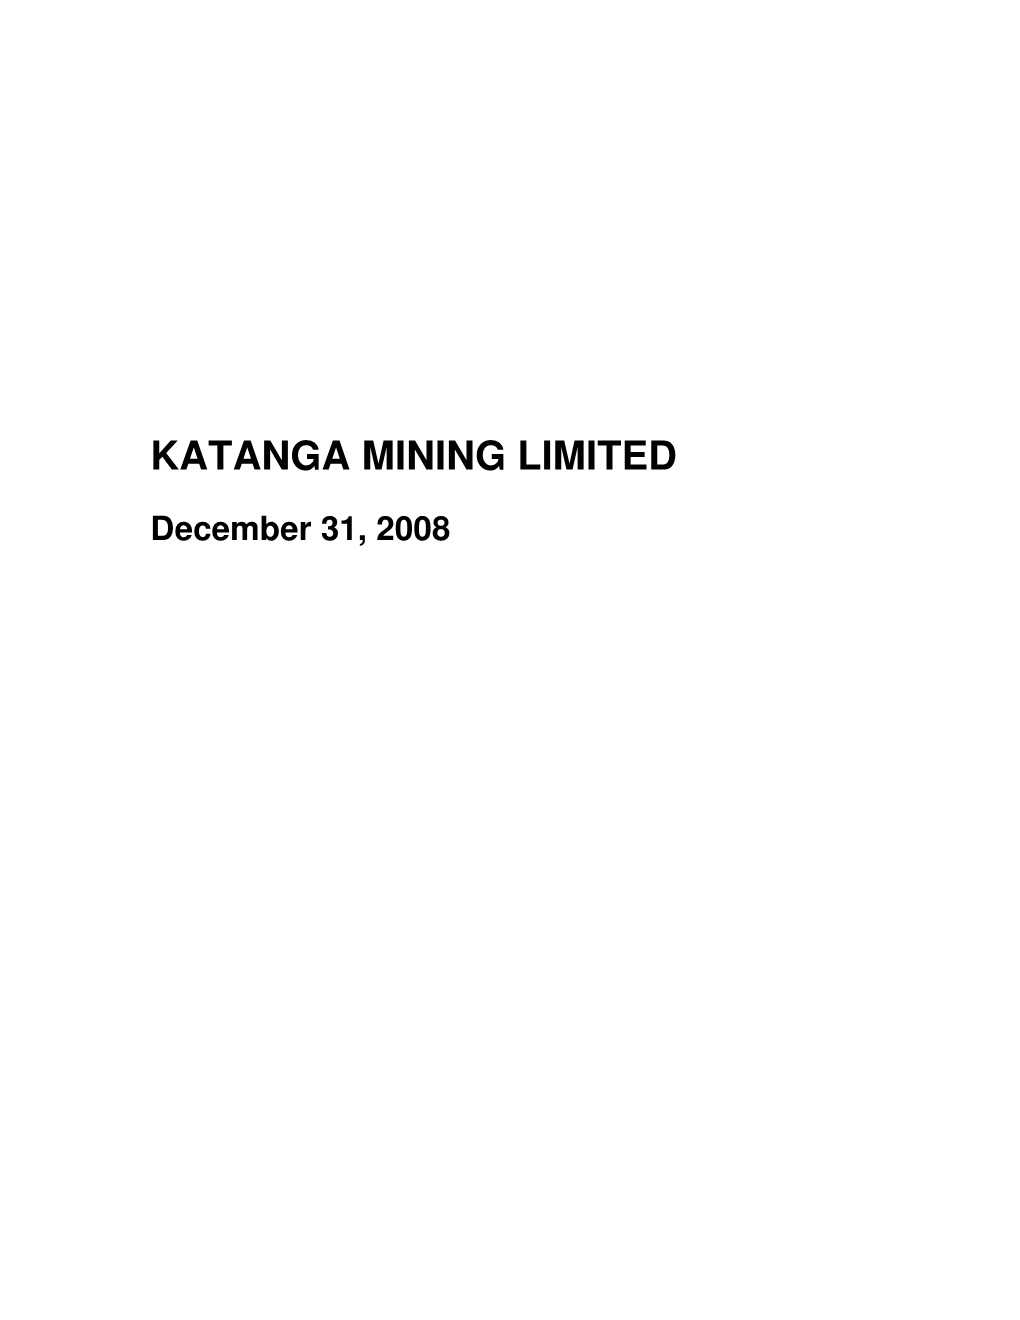 Katanga Mining Limited